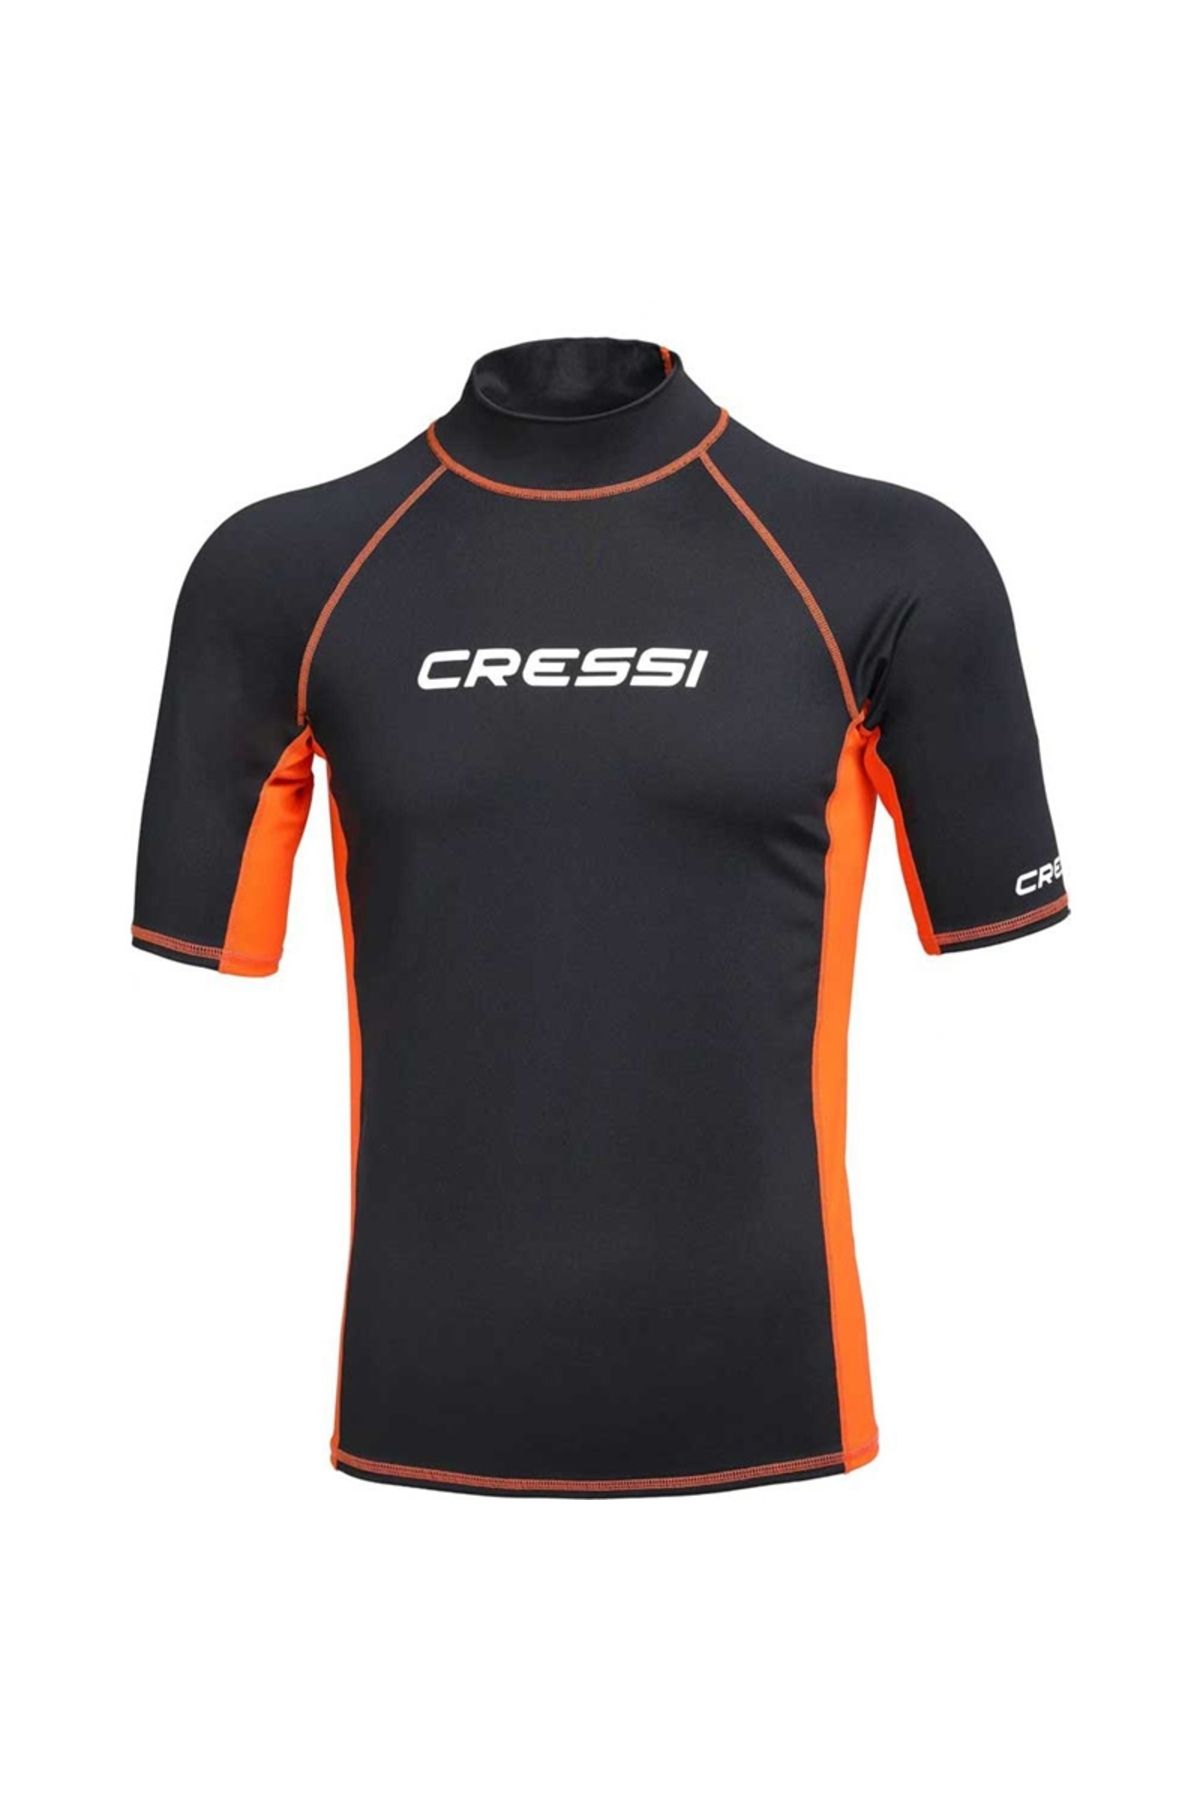 cressi sub Rash Guard Man T-Shirt BLACK - ORANGE-S - NO:2